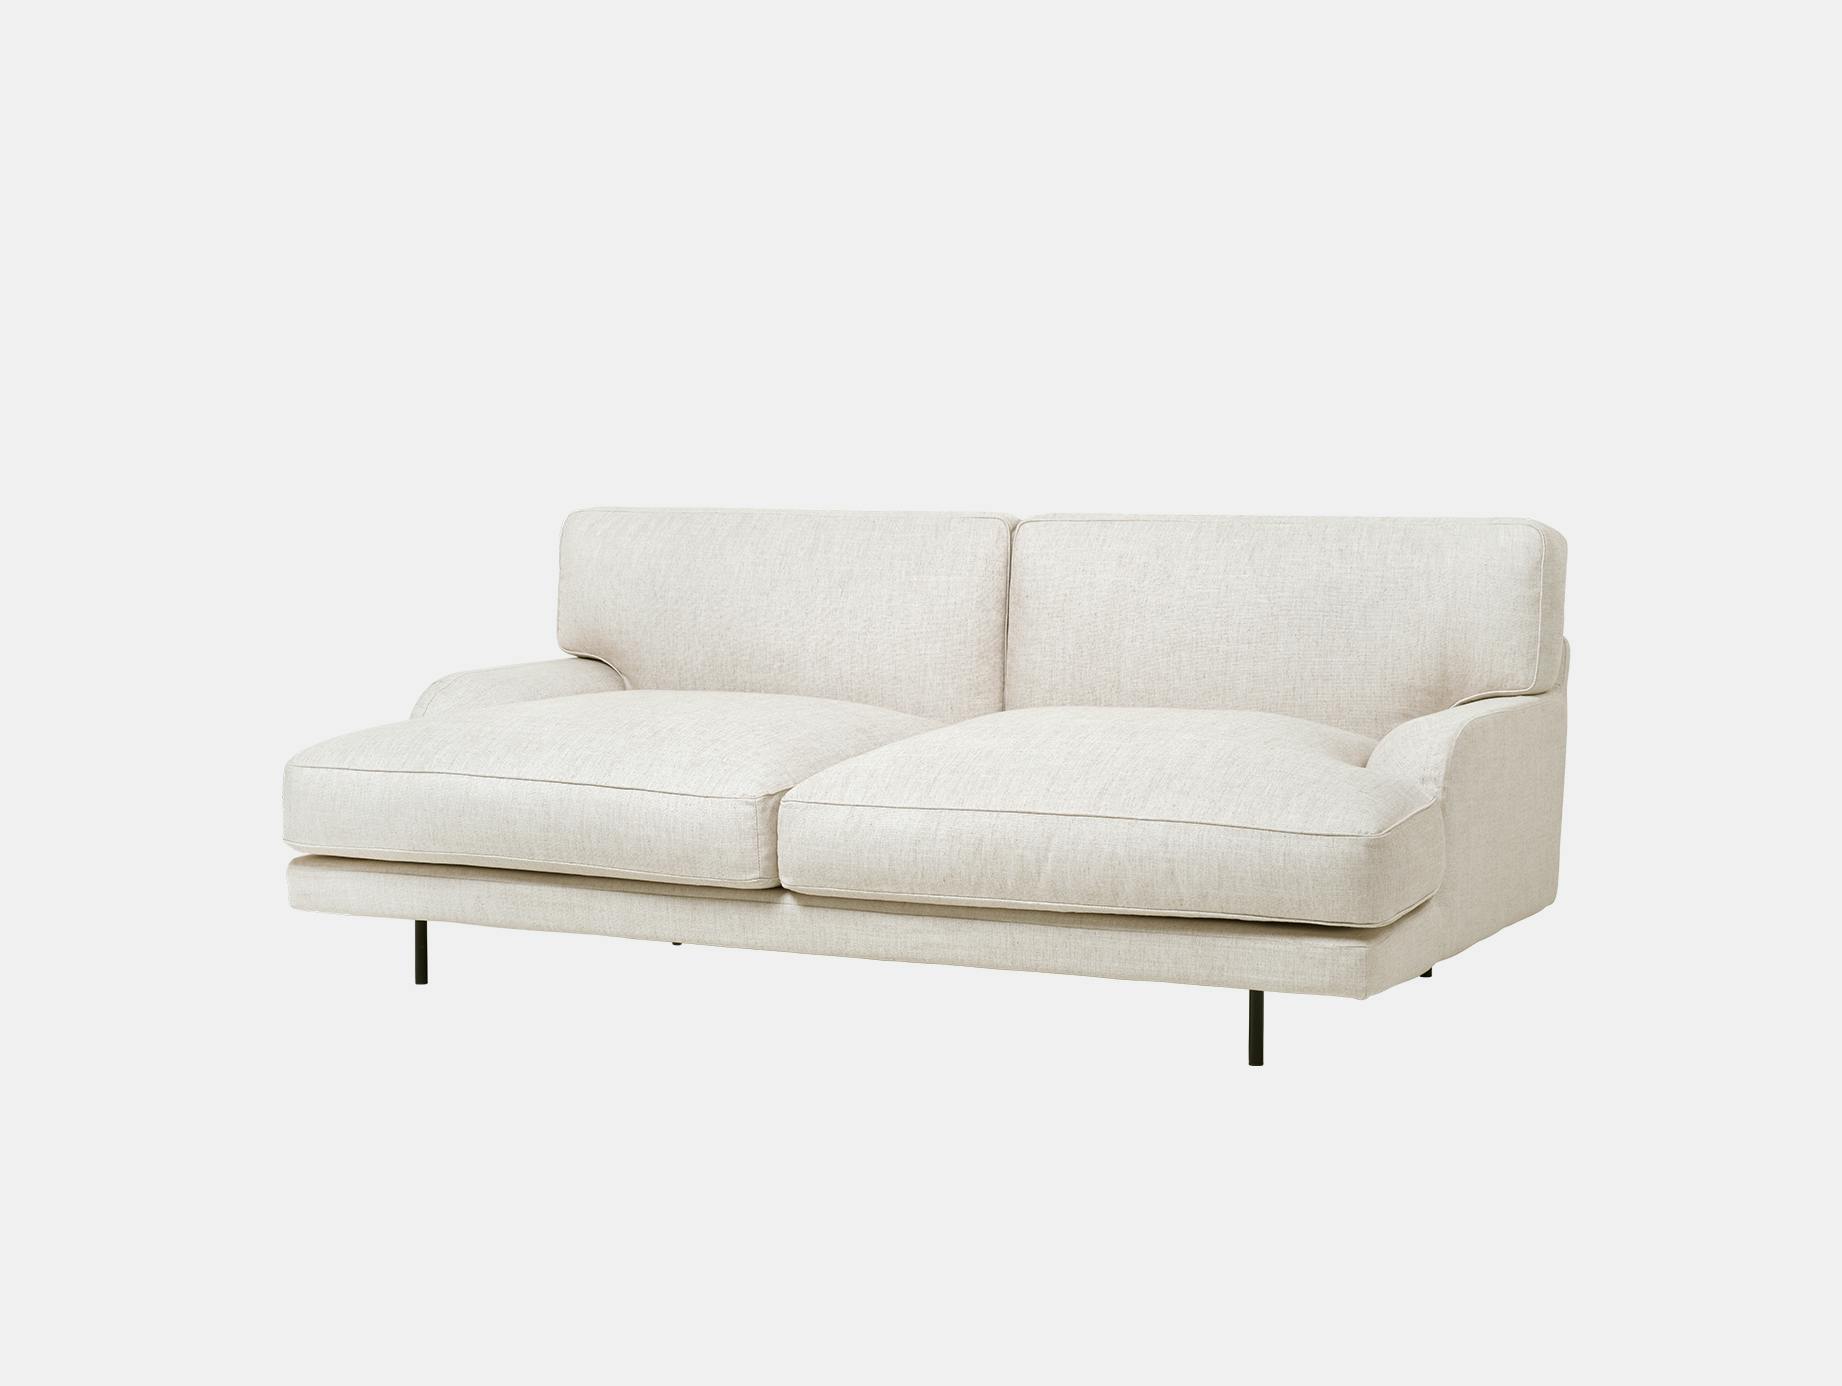 Gubi flaneur sofa 2 seat chambray24 blk d